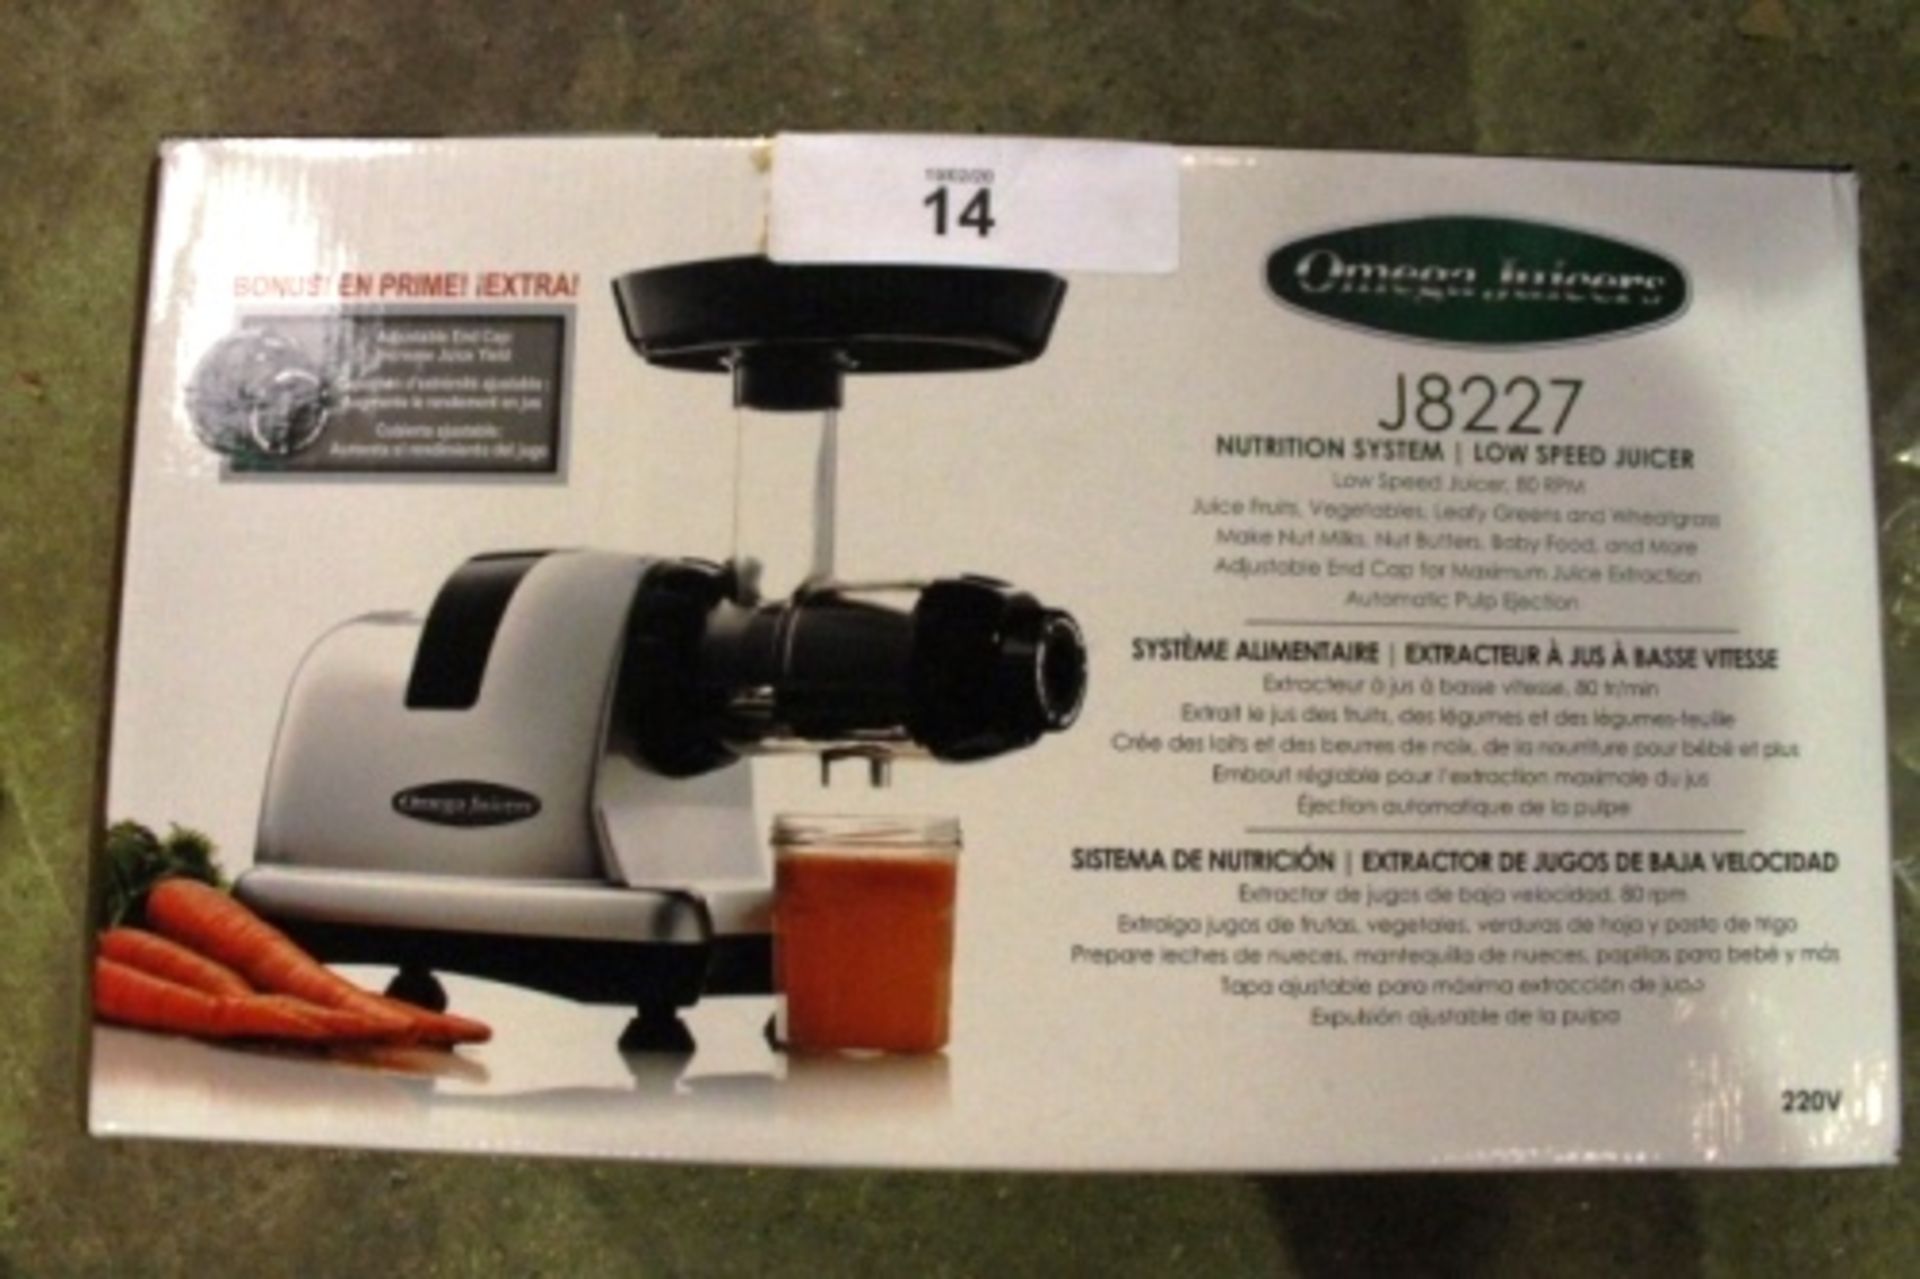 An Omega juicer, model J8227 - Sealed new in box (esb1)